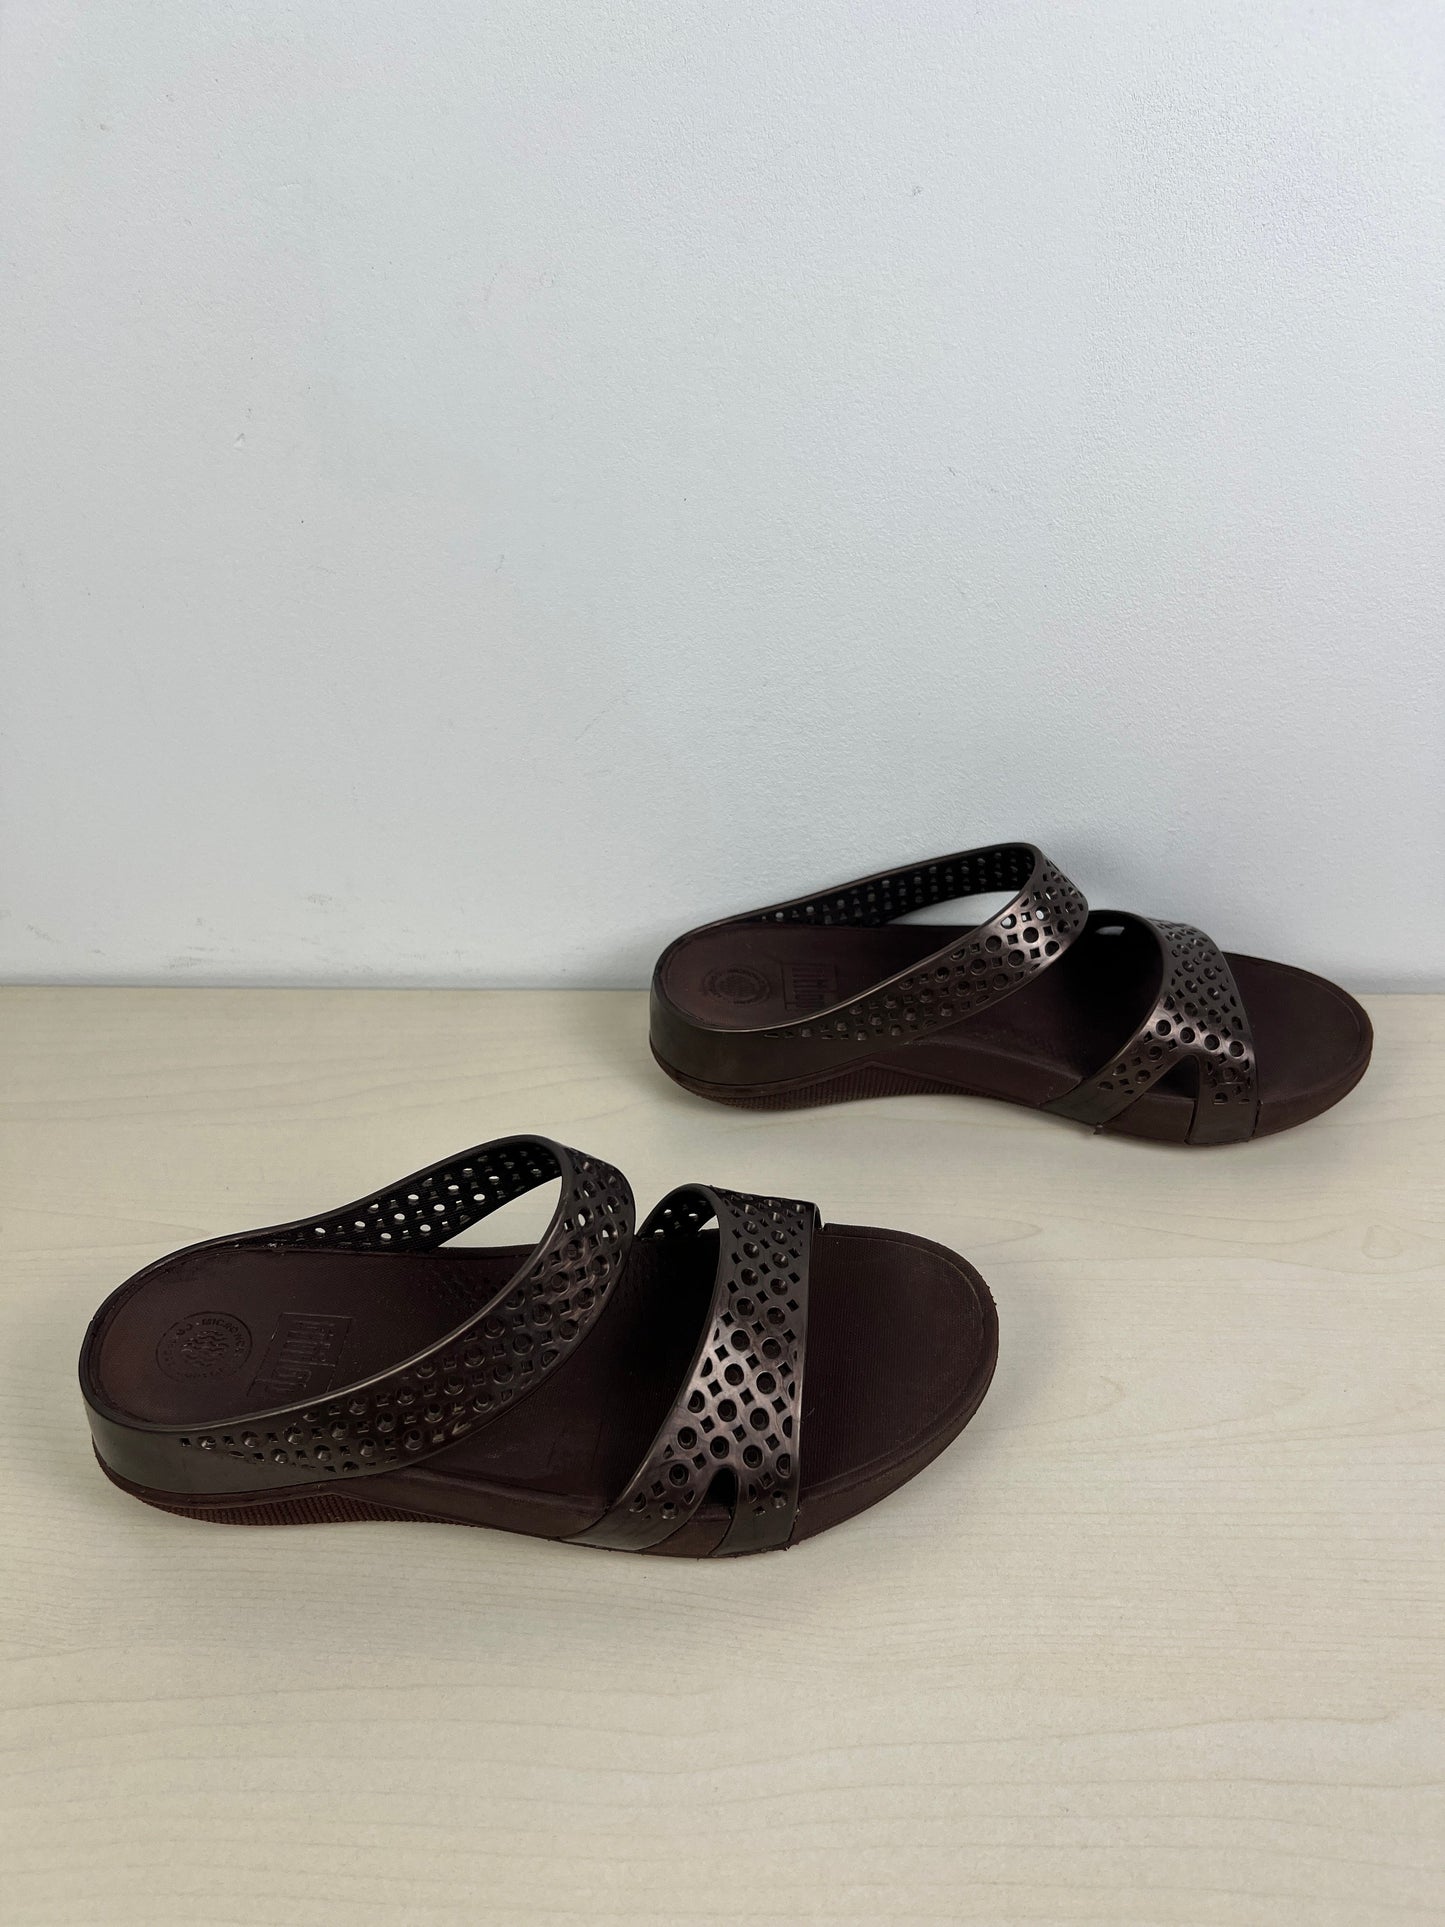 Bronze Sandals Sport Fitflop, Size 7